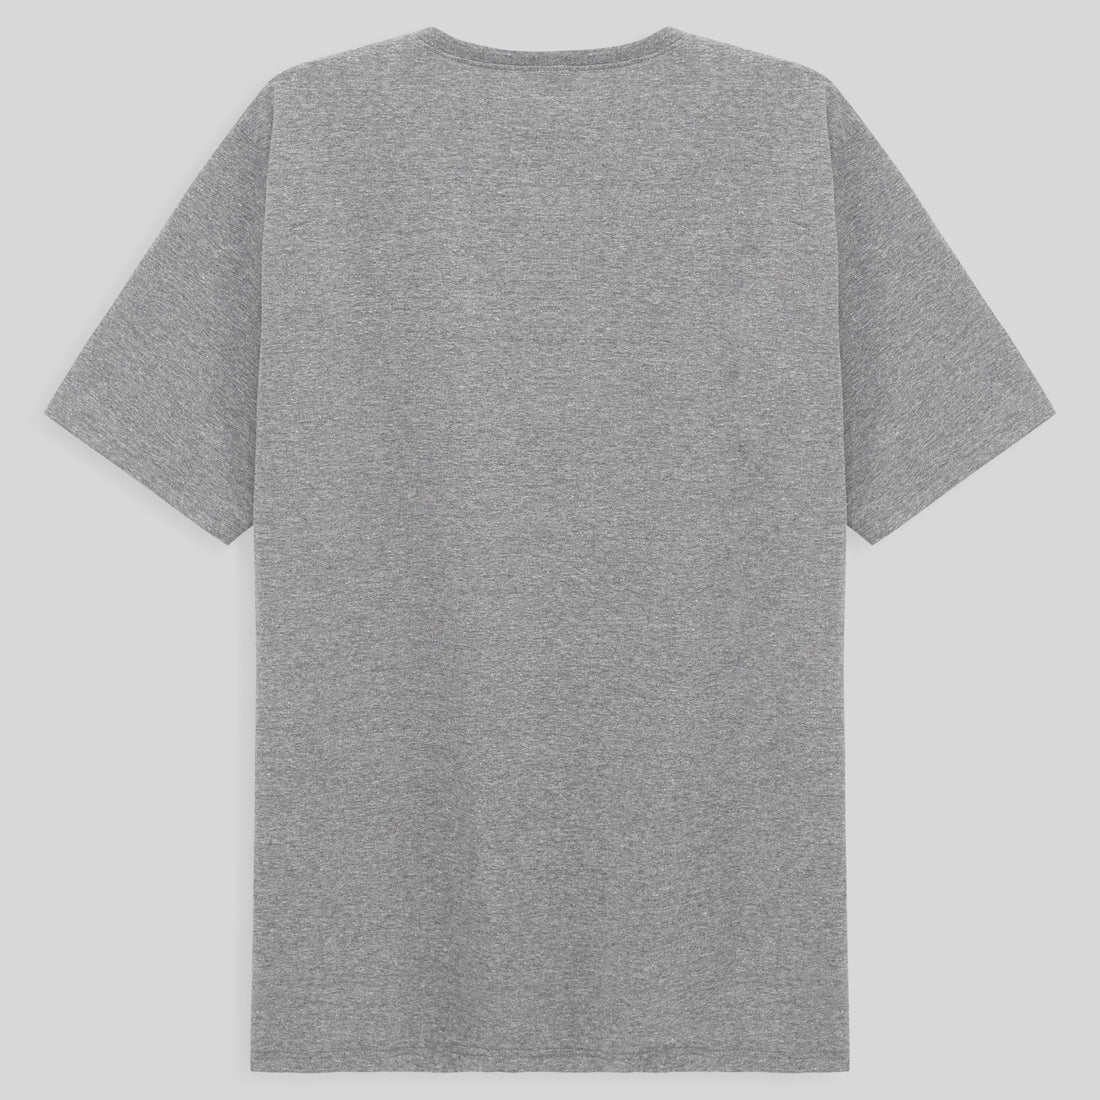 Tech T-Shirt Anti Odor Gola C Plus Size Masculina - Mescla Claro